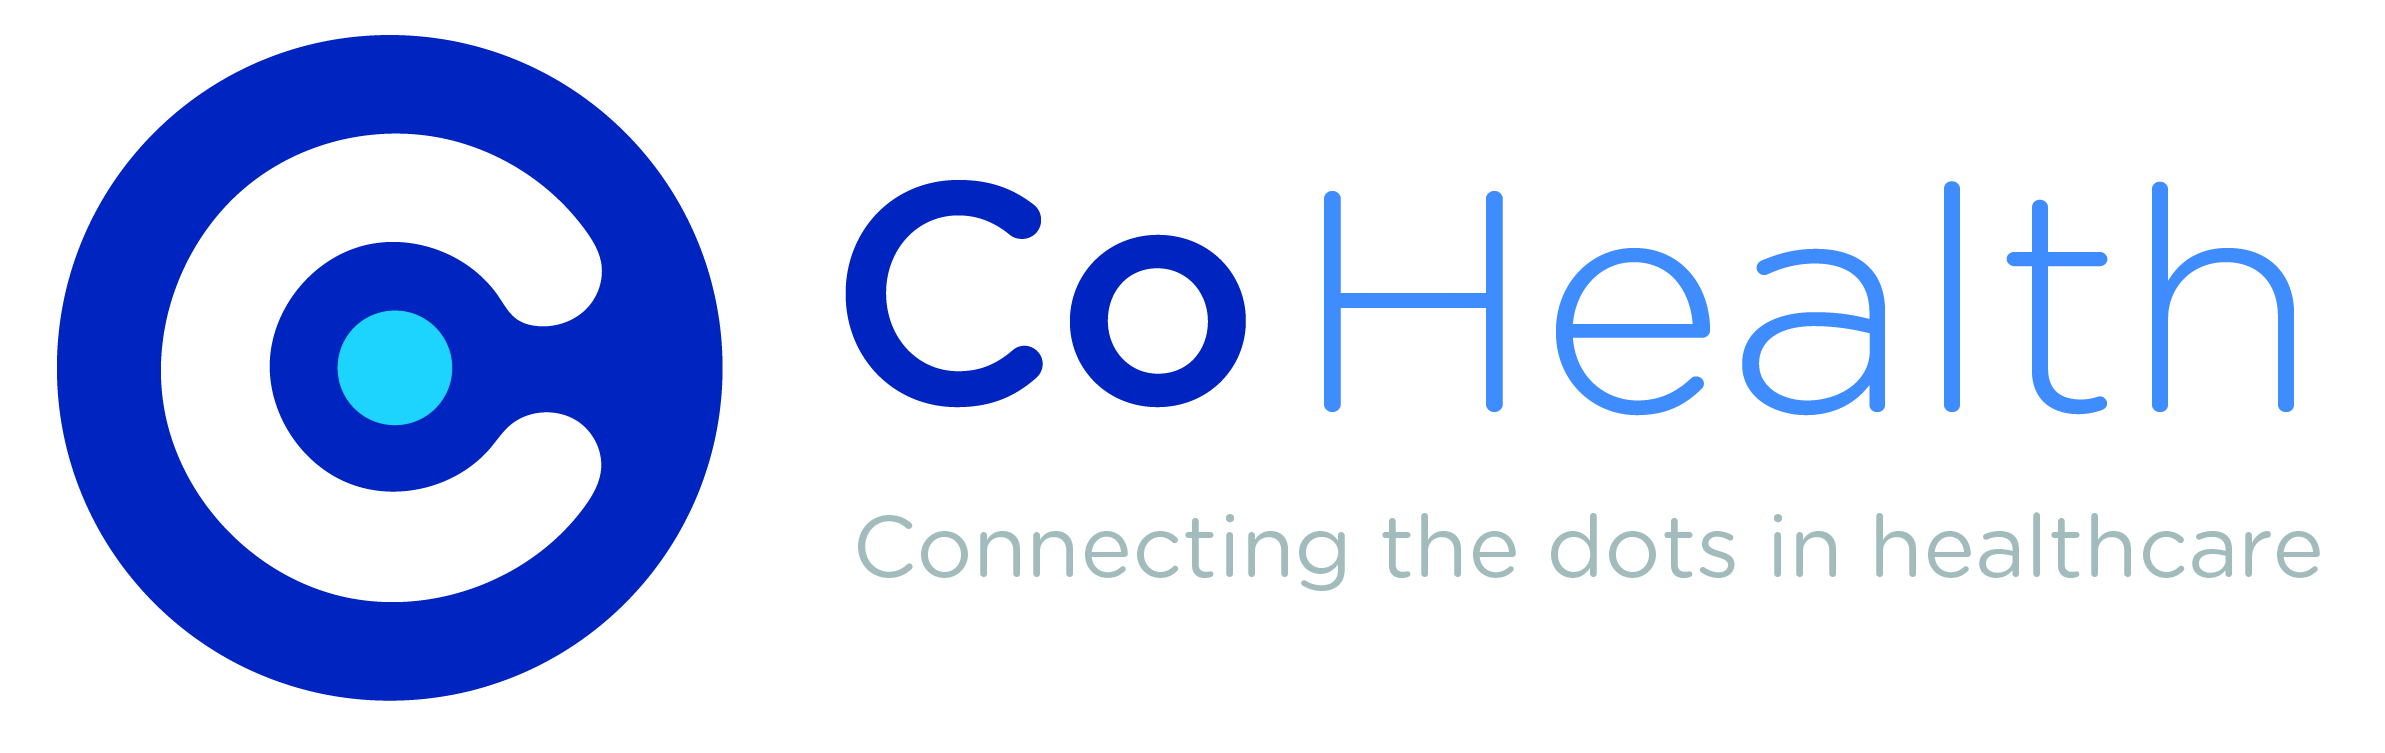 CoHealth Logo 1